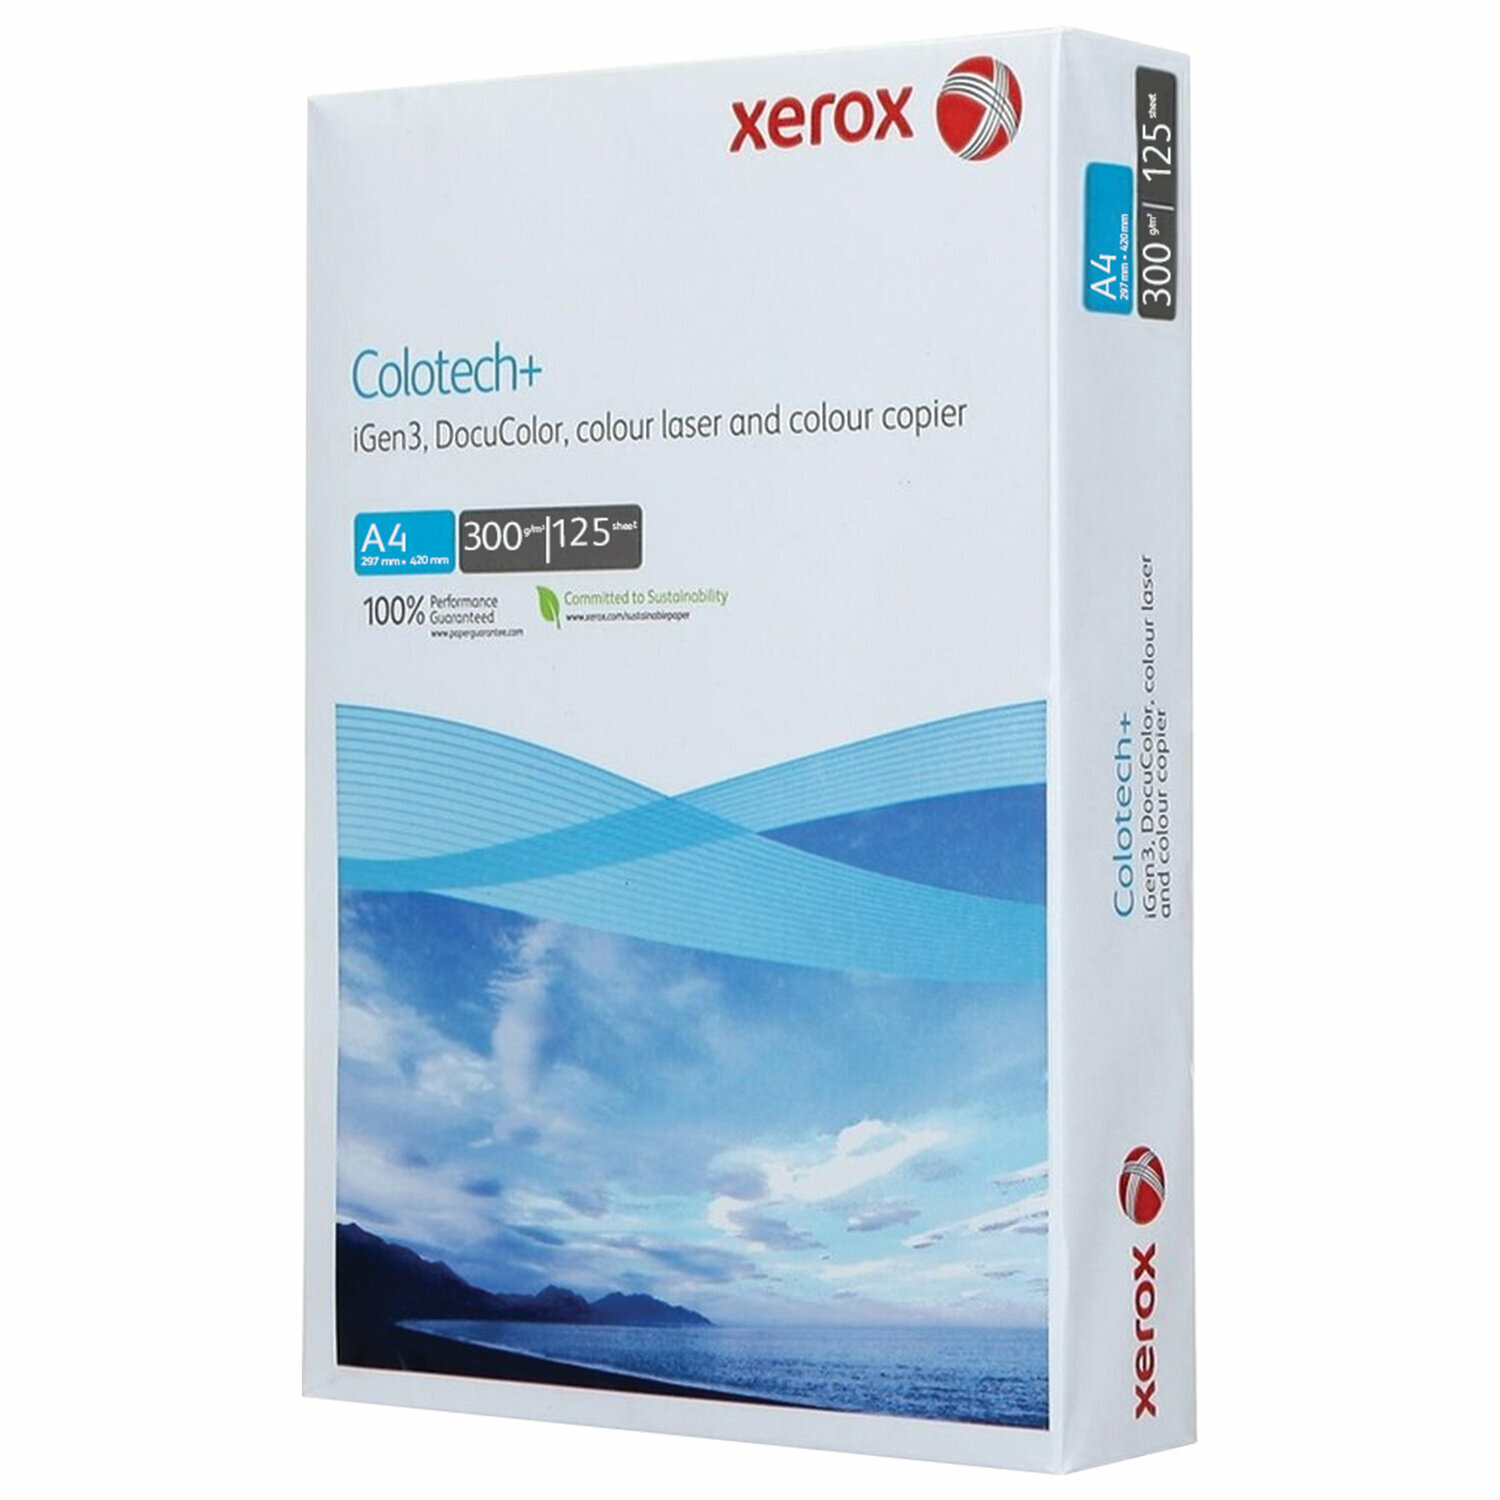 Бумага для цветной лазерной печати XEROX COLOTECH+ Blue 003R9755, А4, 300 г/м2, 125 л, 161%